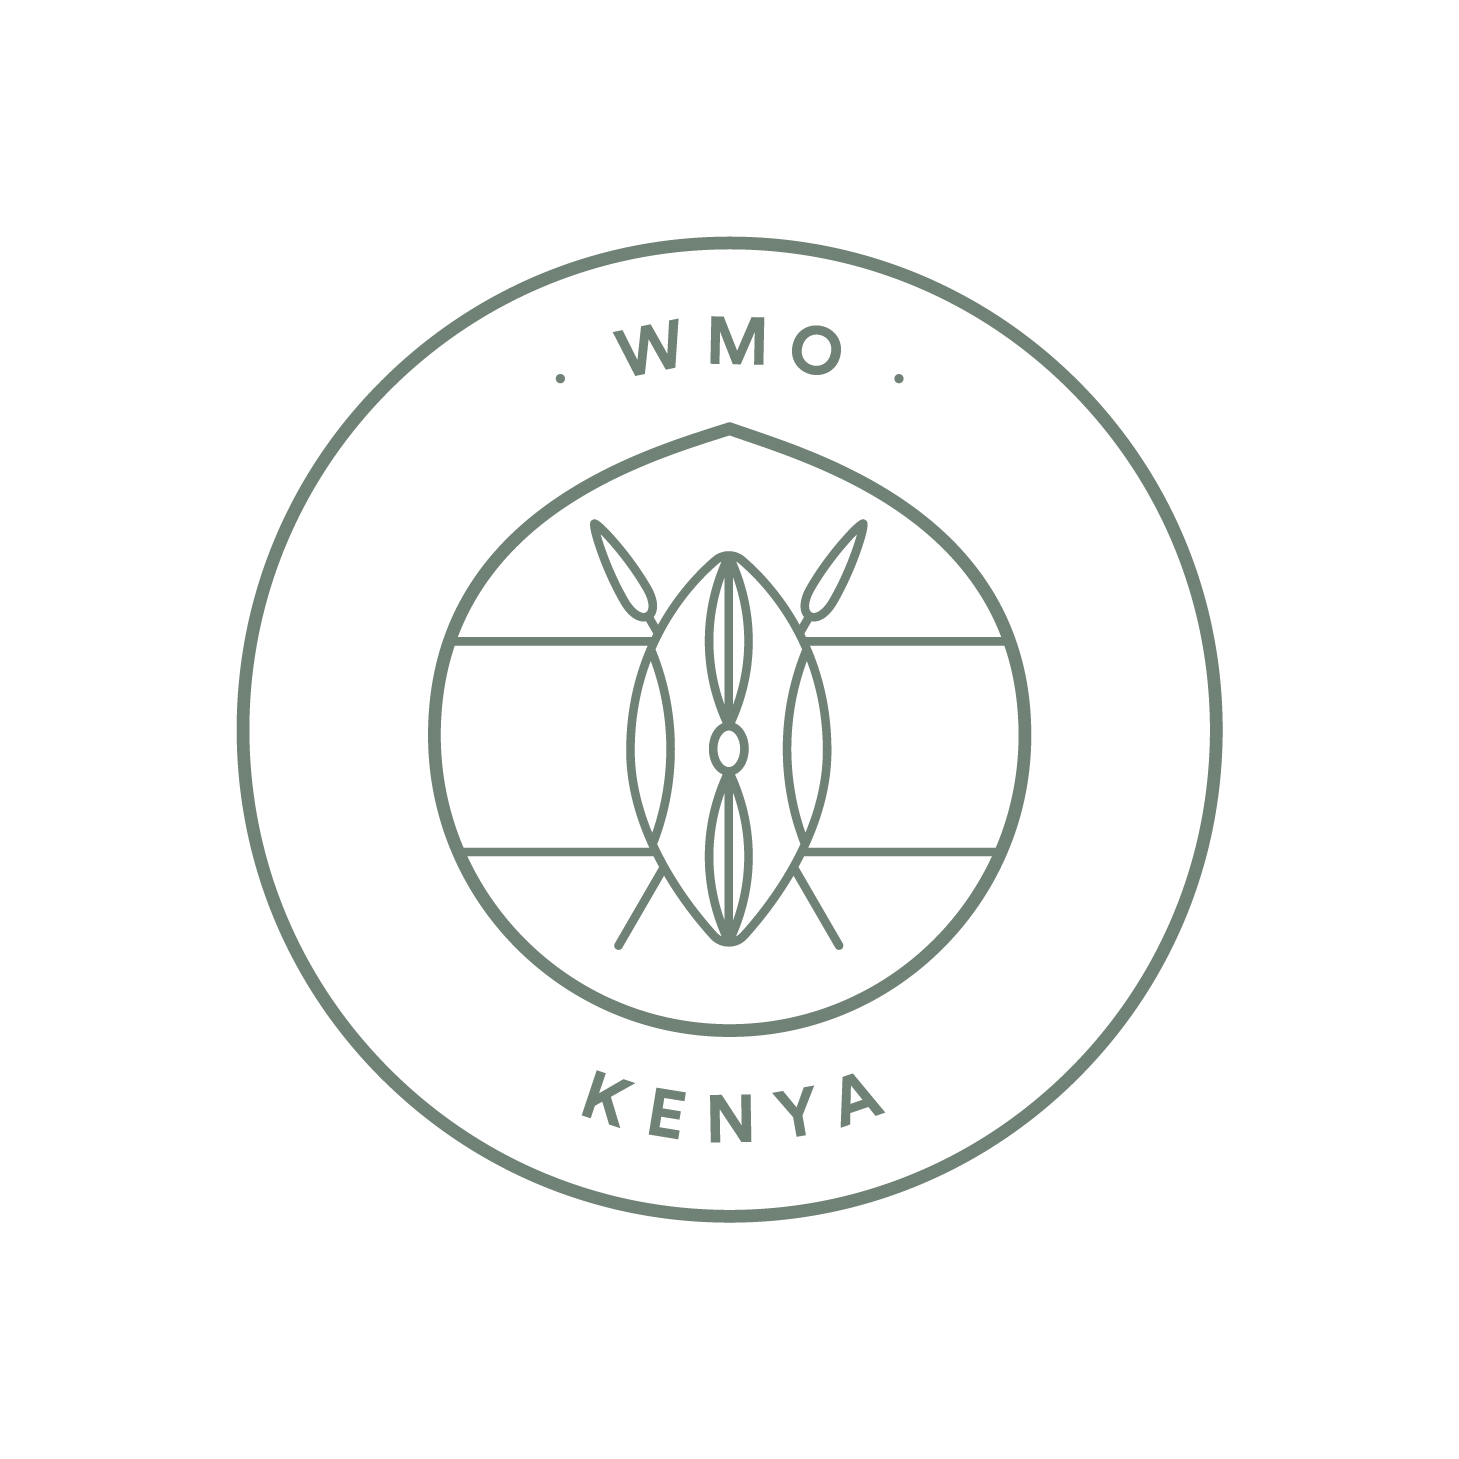 Kenya World Macadamia Organisation member